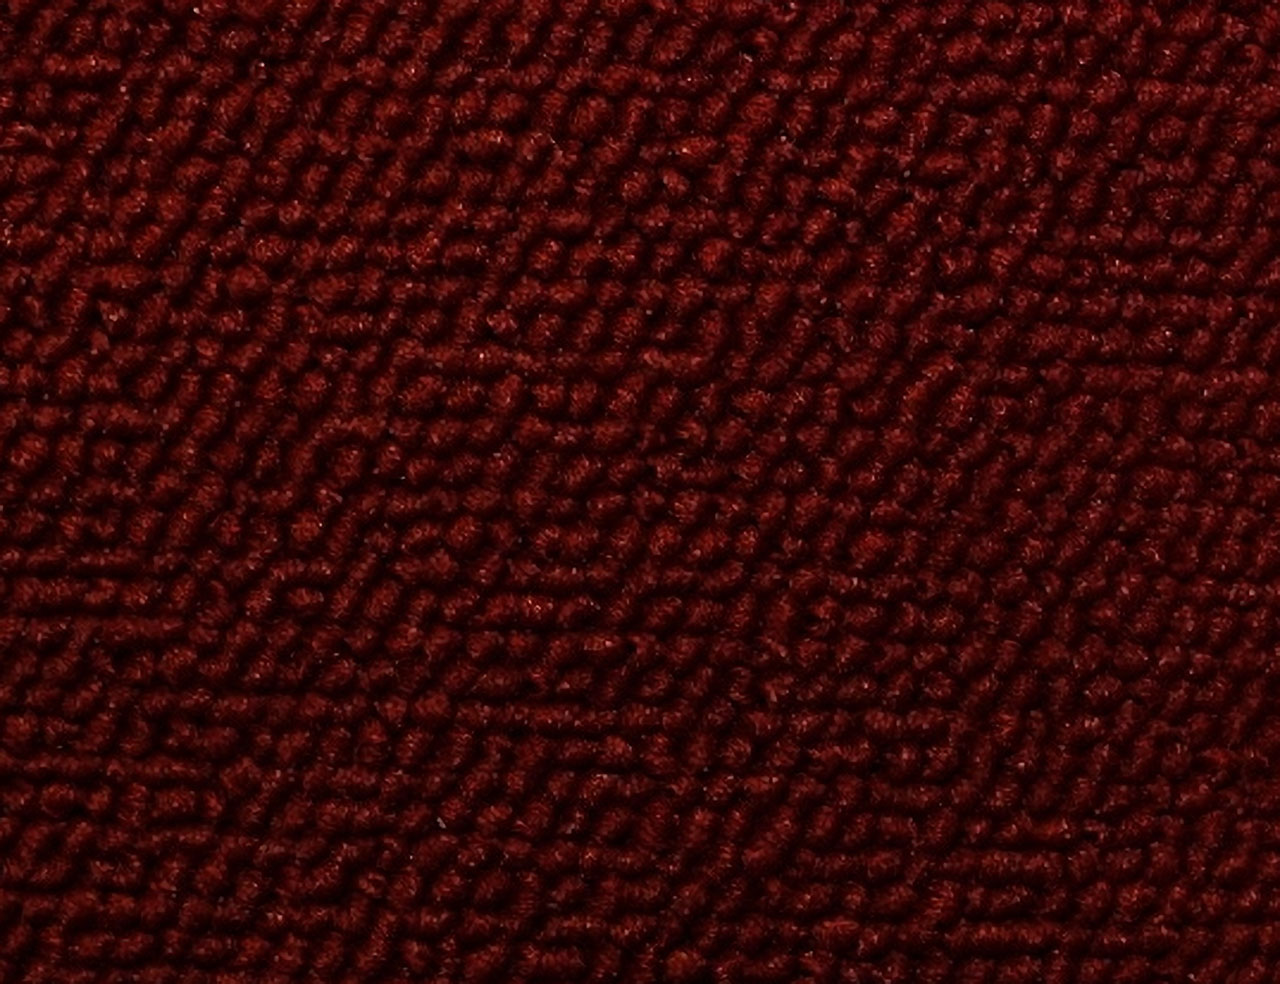 Holden Standard EH Standard Sedan C16 Bolero Red Carpet (Image 1 of 1)